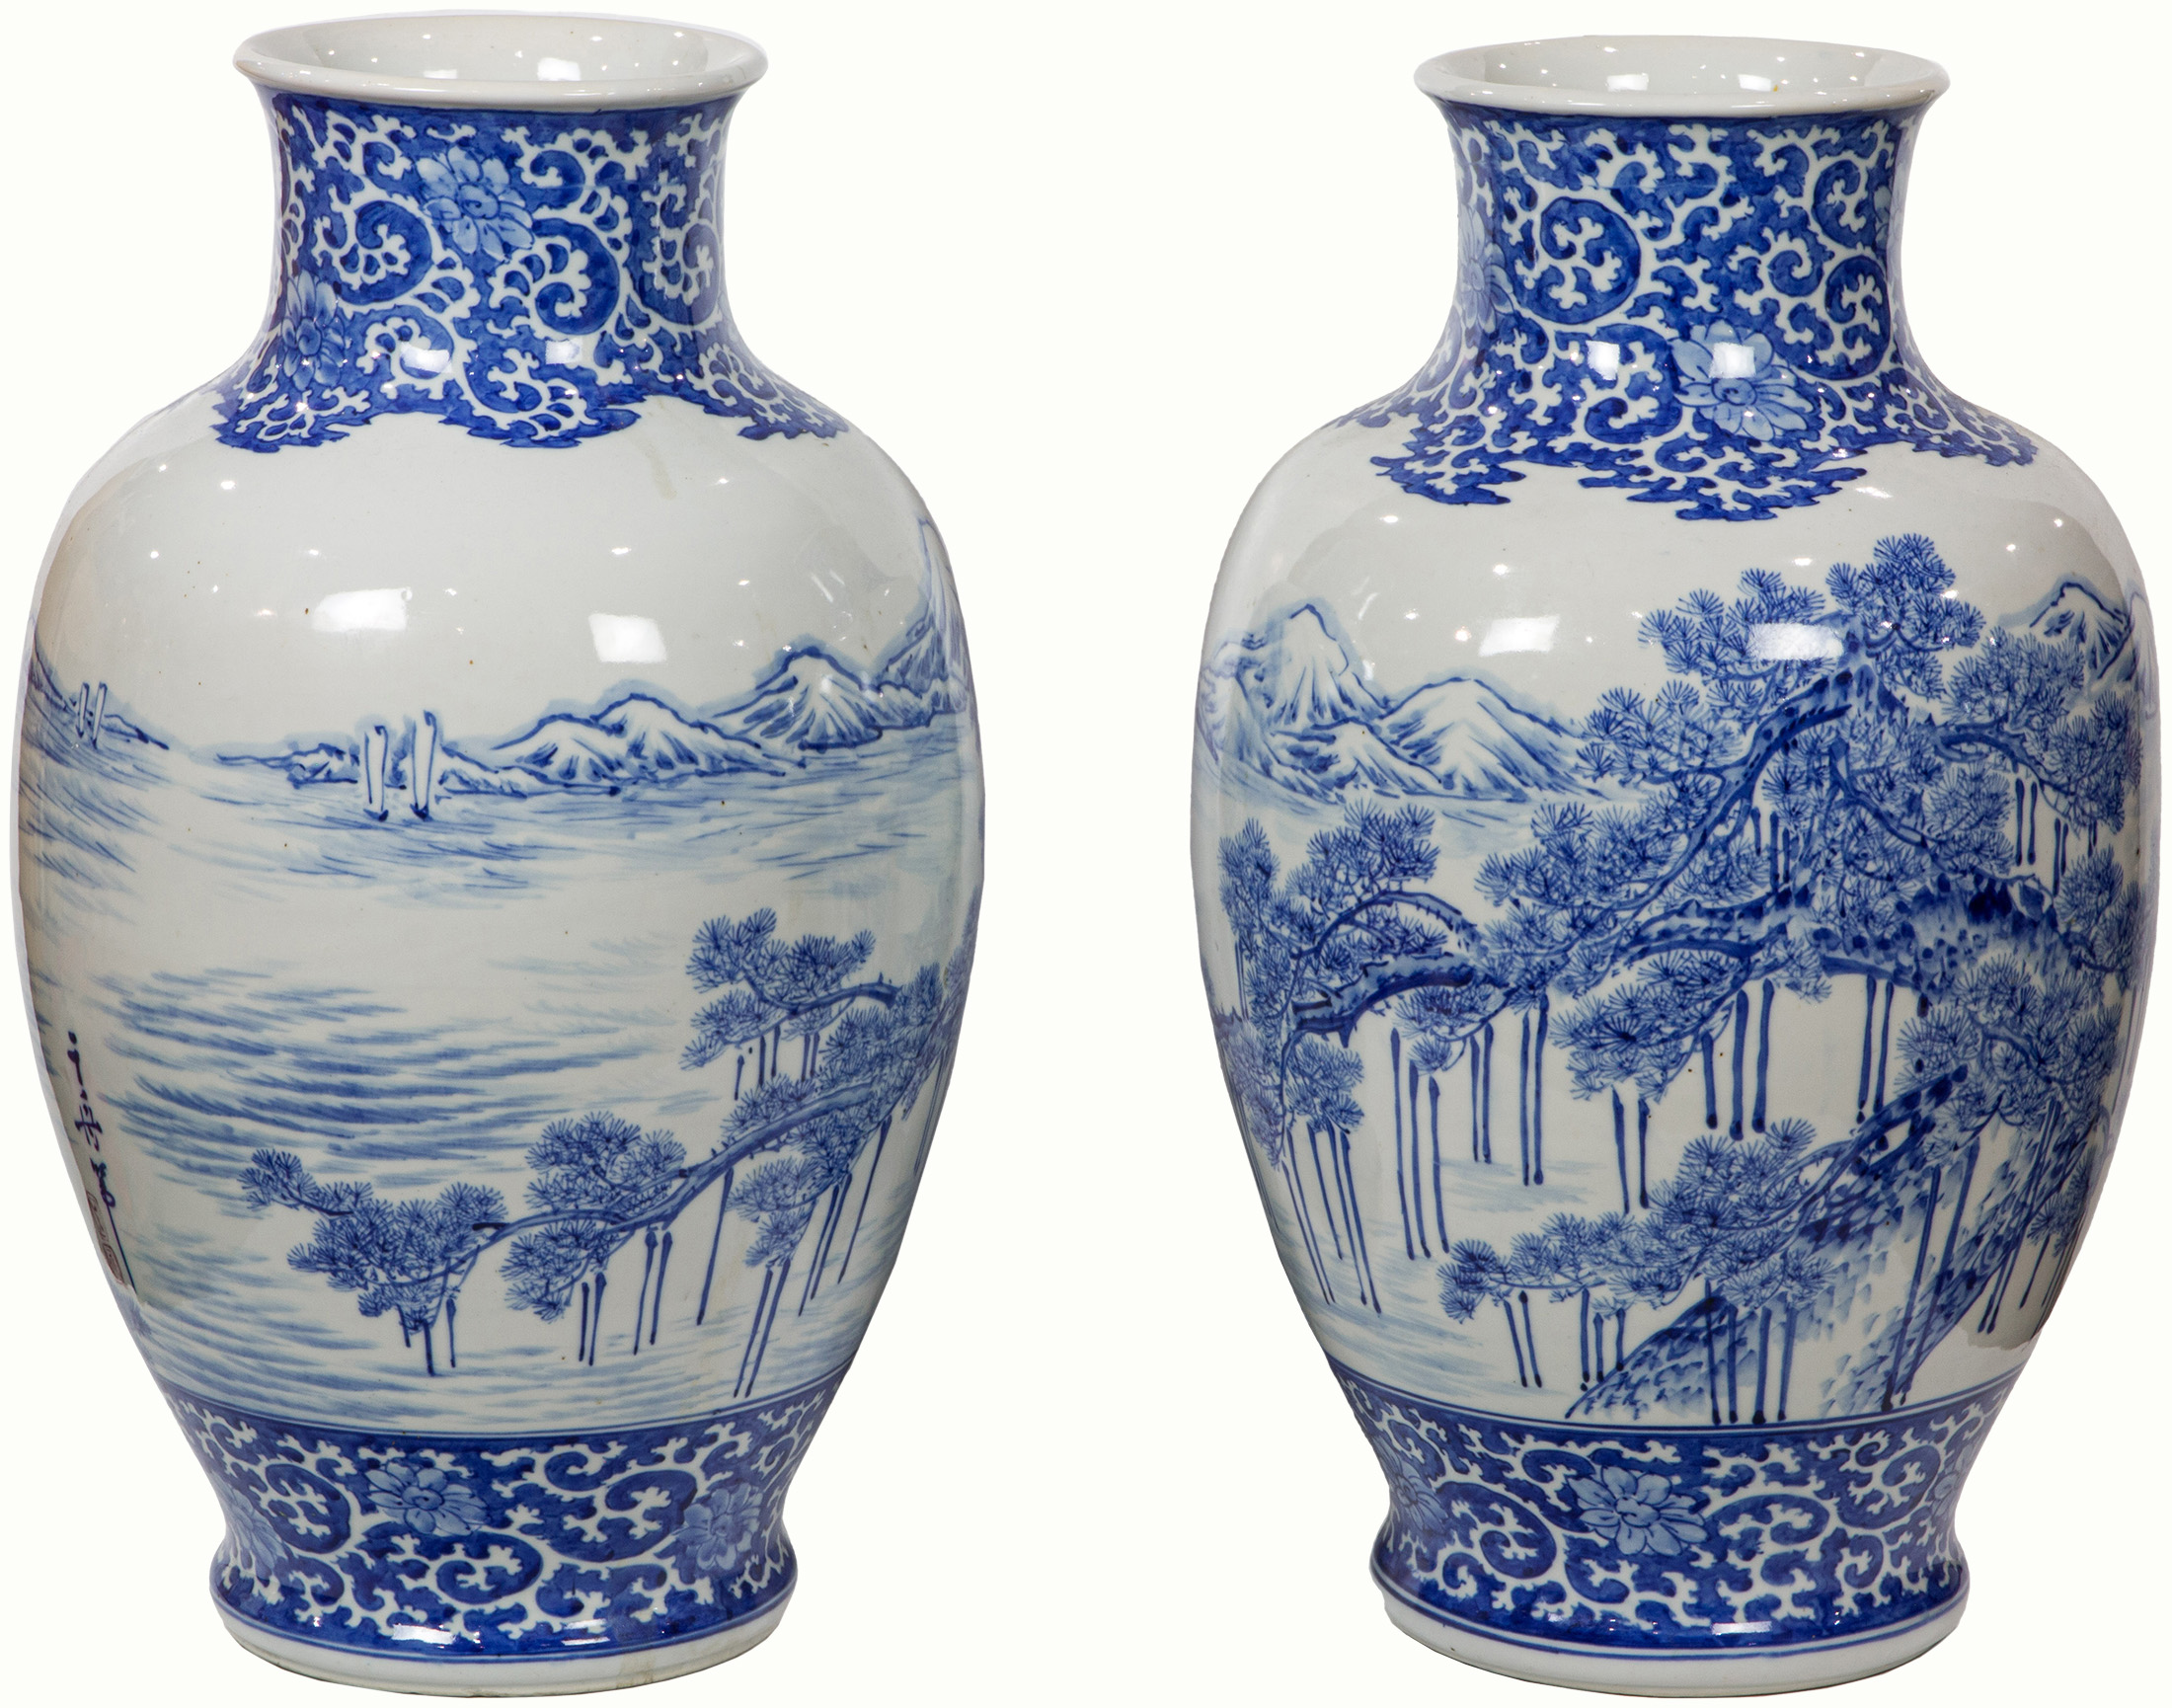 A pair of Asian underglaze blue vases, 23.75″ tall.